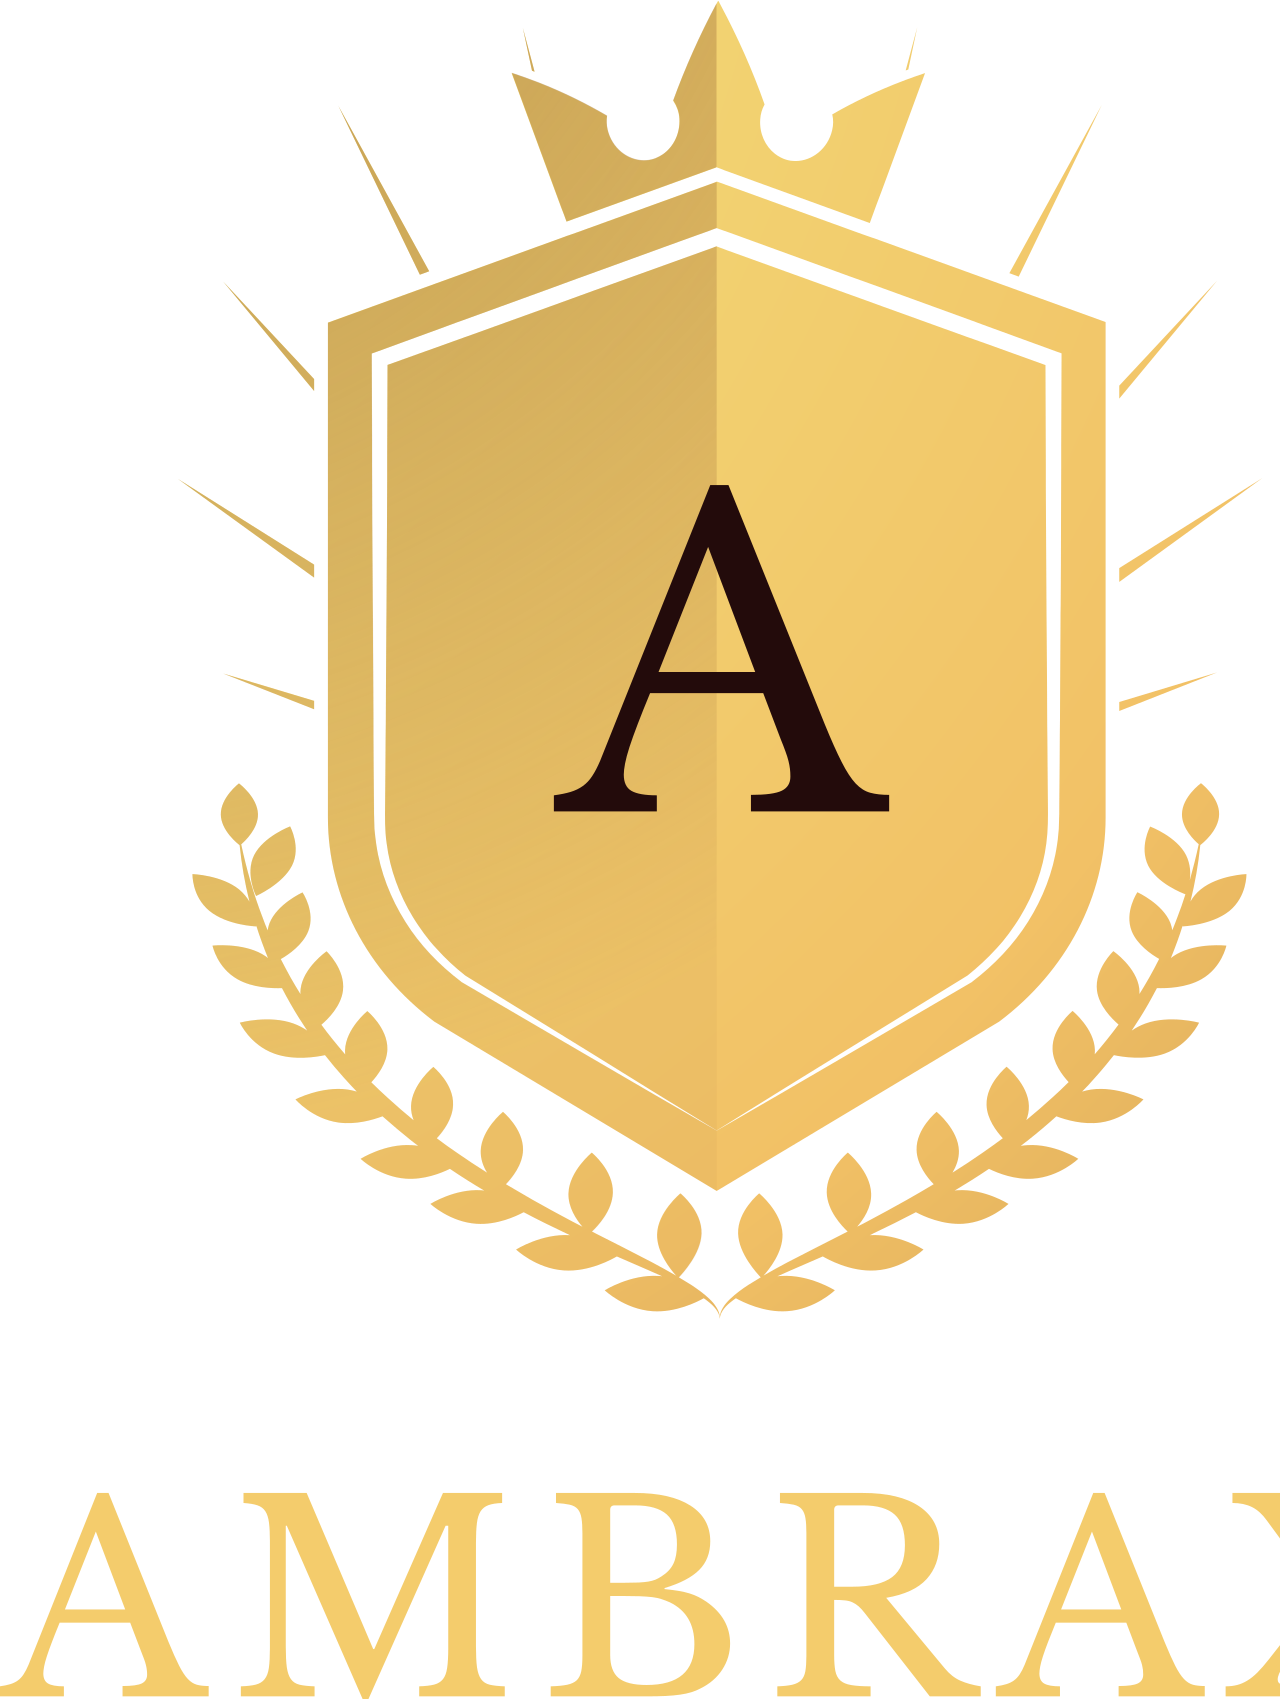 Ambrax's logo